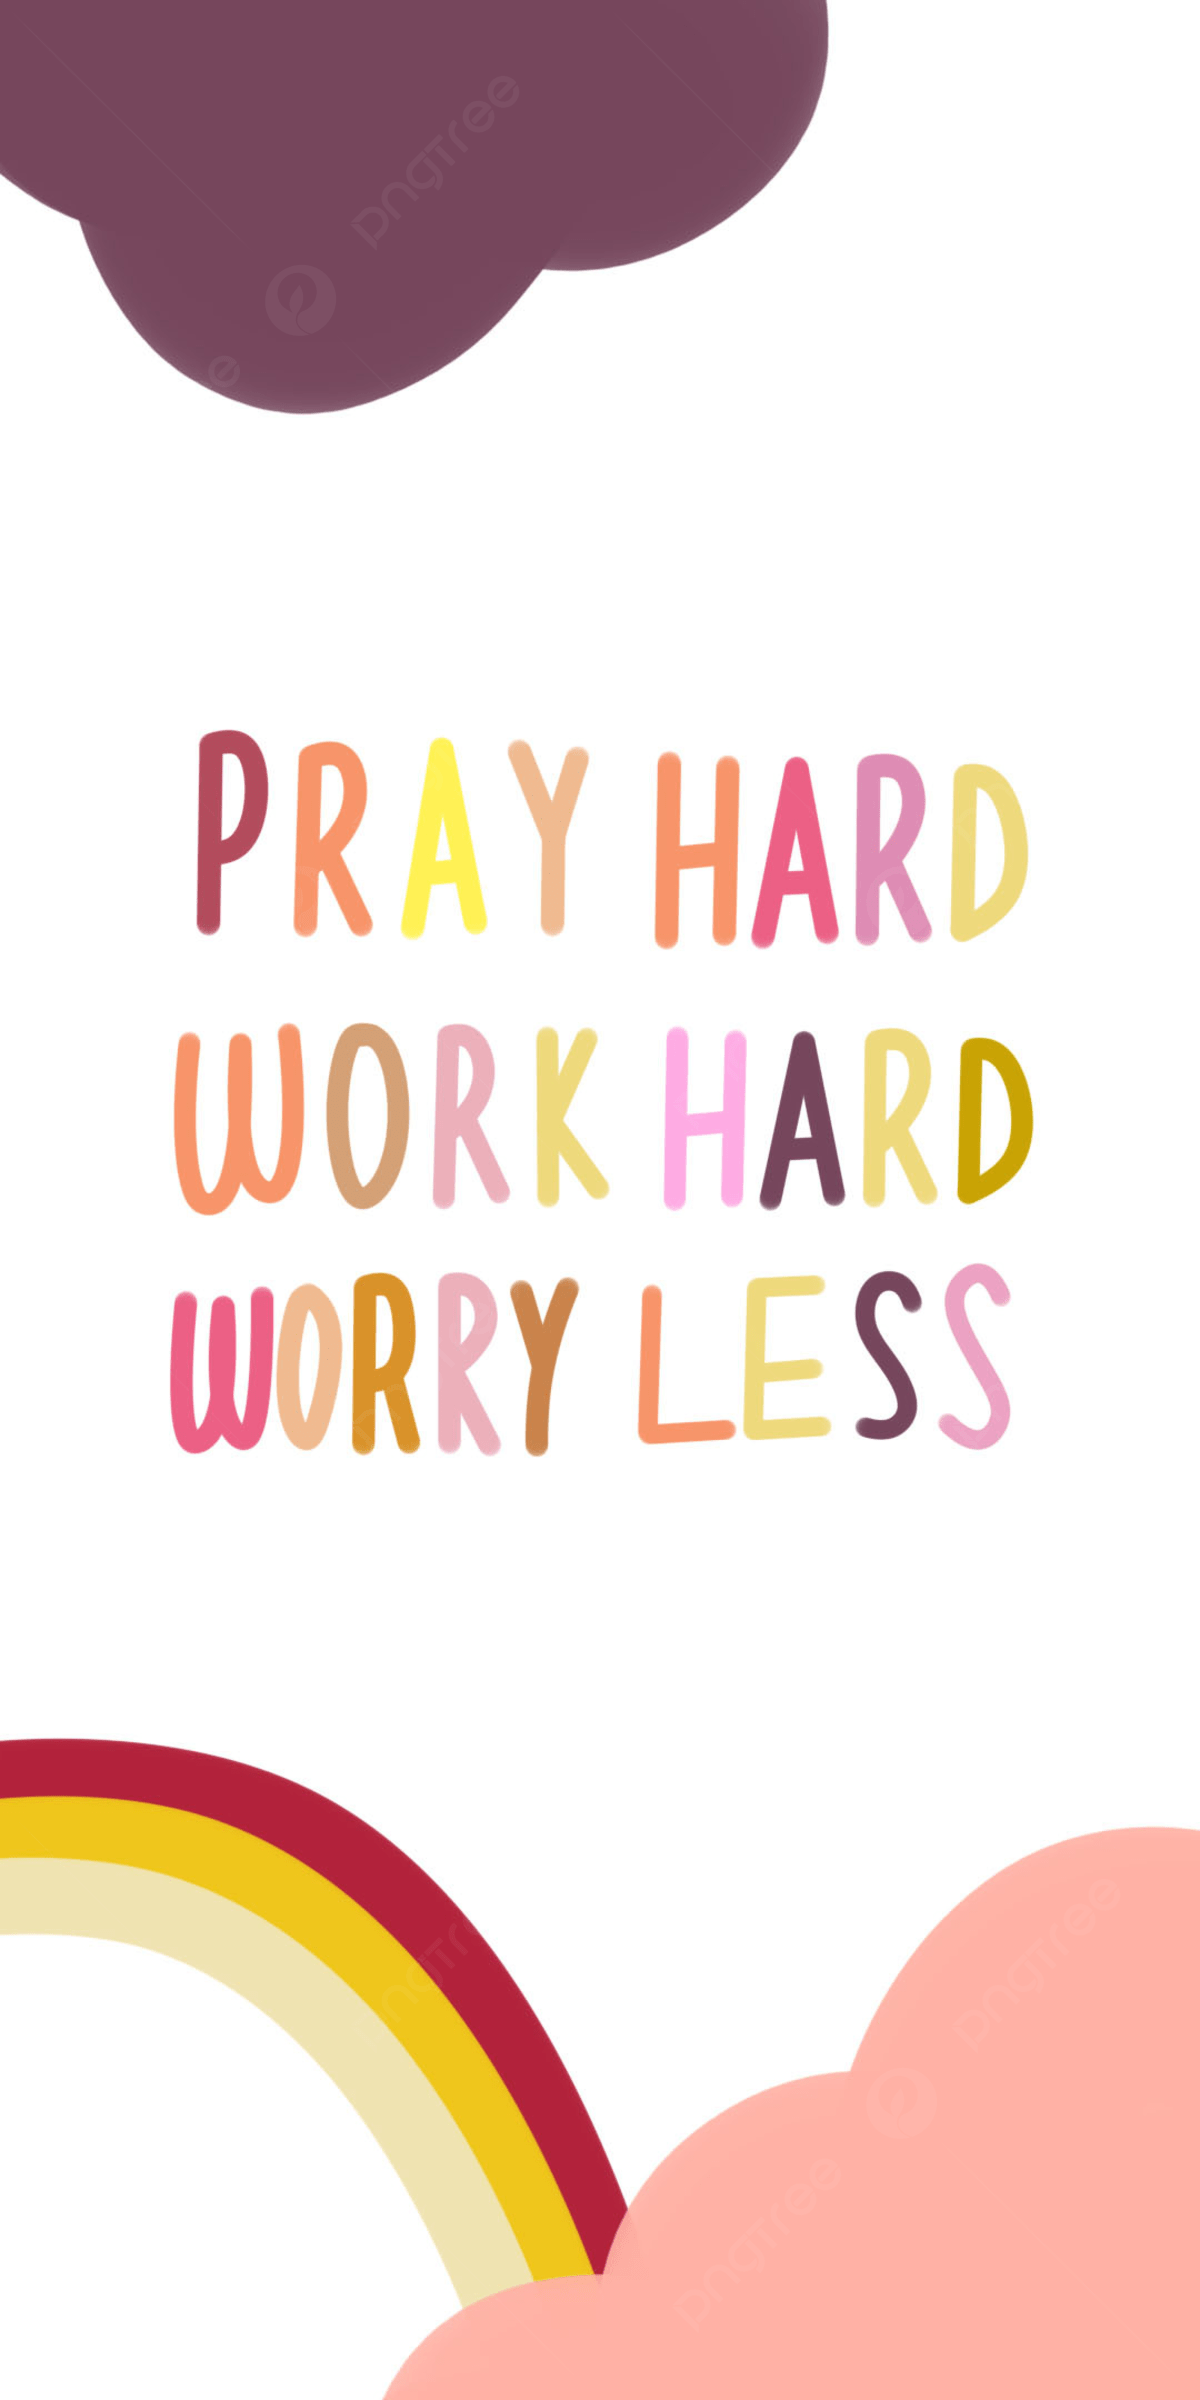 Pray hard work harder poster - Motivational, quotes, inspirational